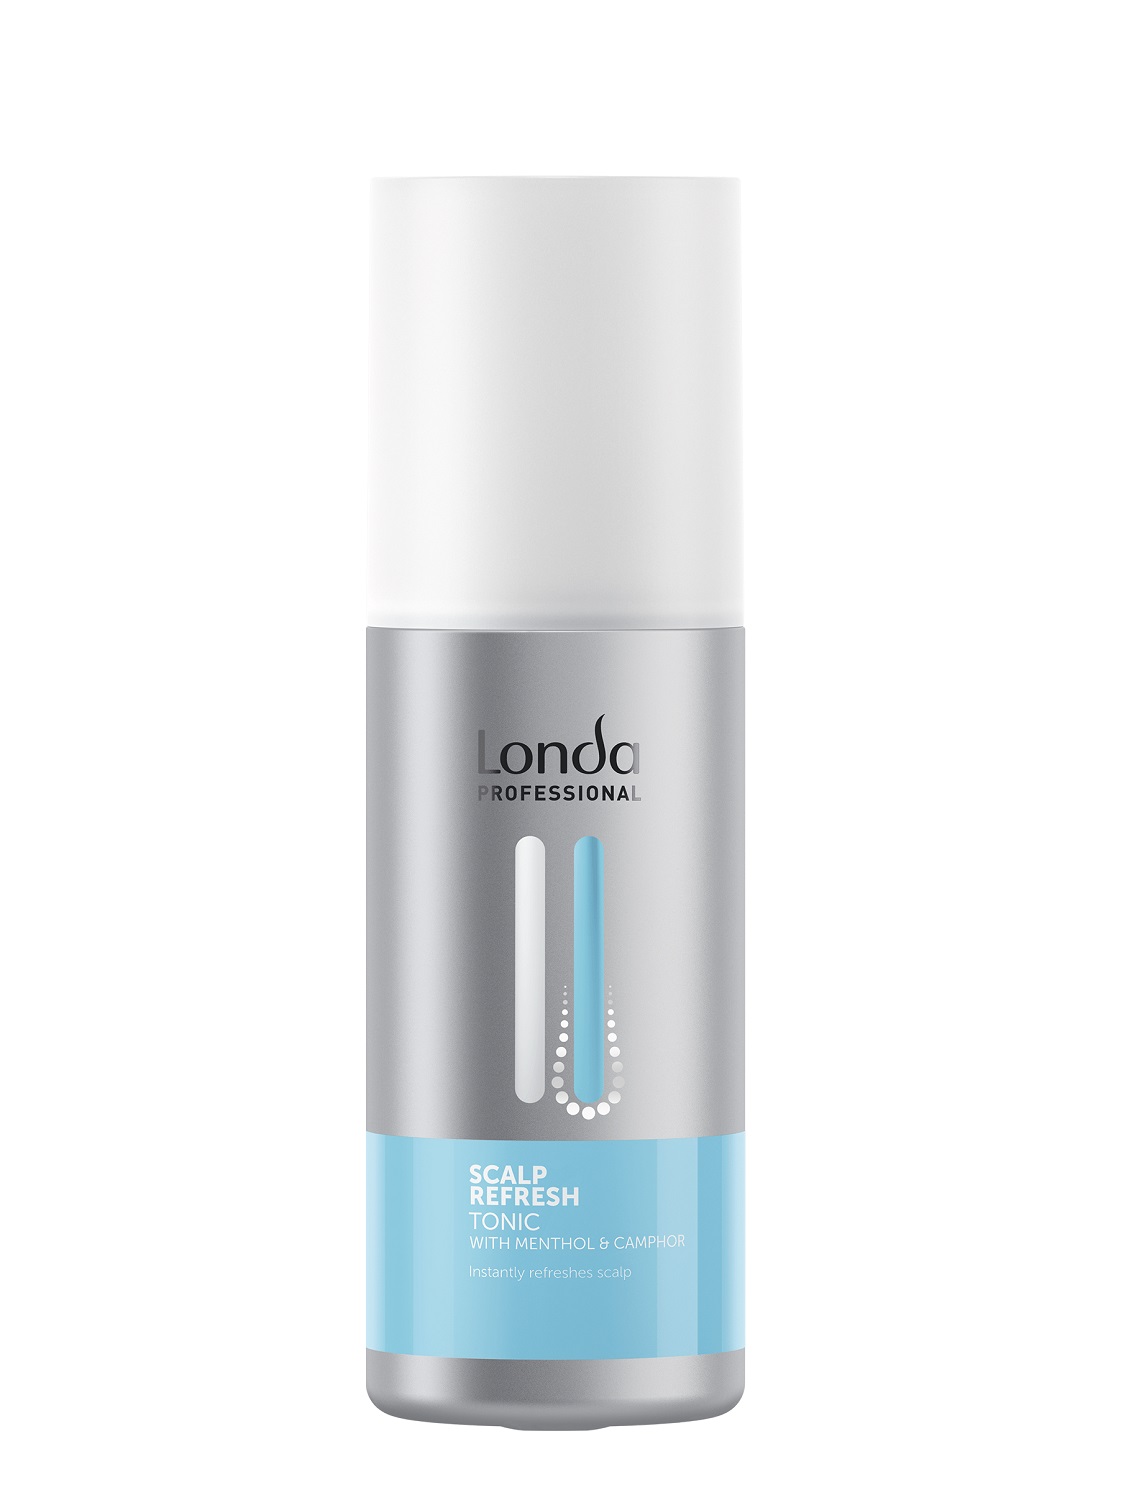 Londa Professional Освежающий тоник для кожи головы Refresh, 150 мл (Londa Professional, Scalp) цена и фото